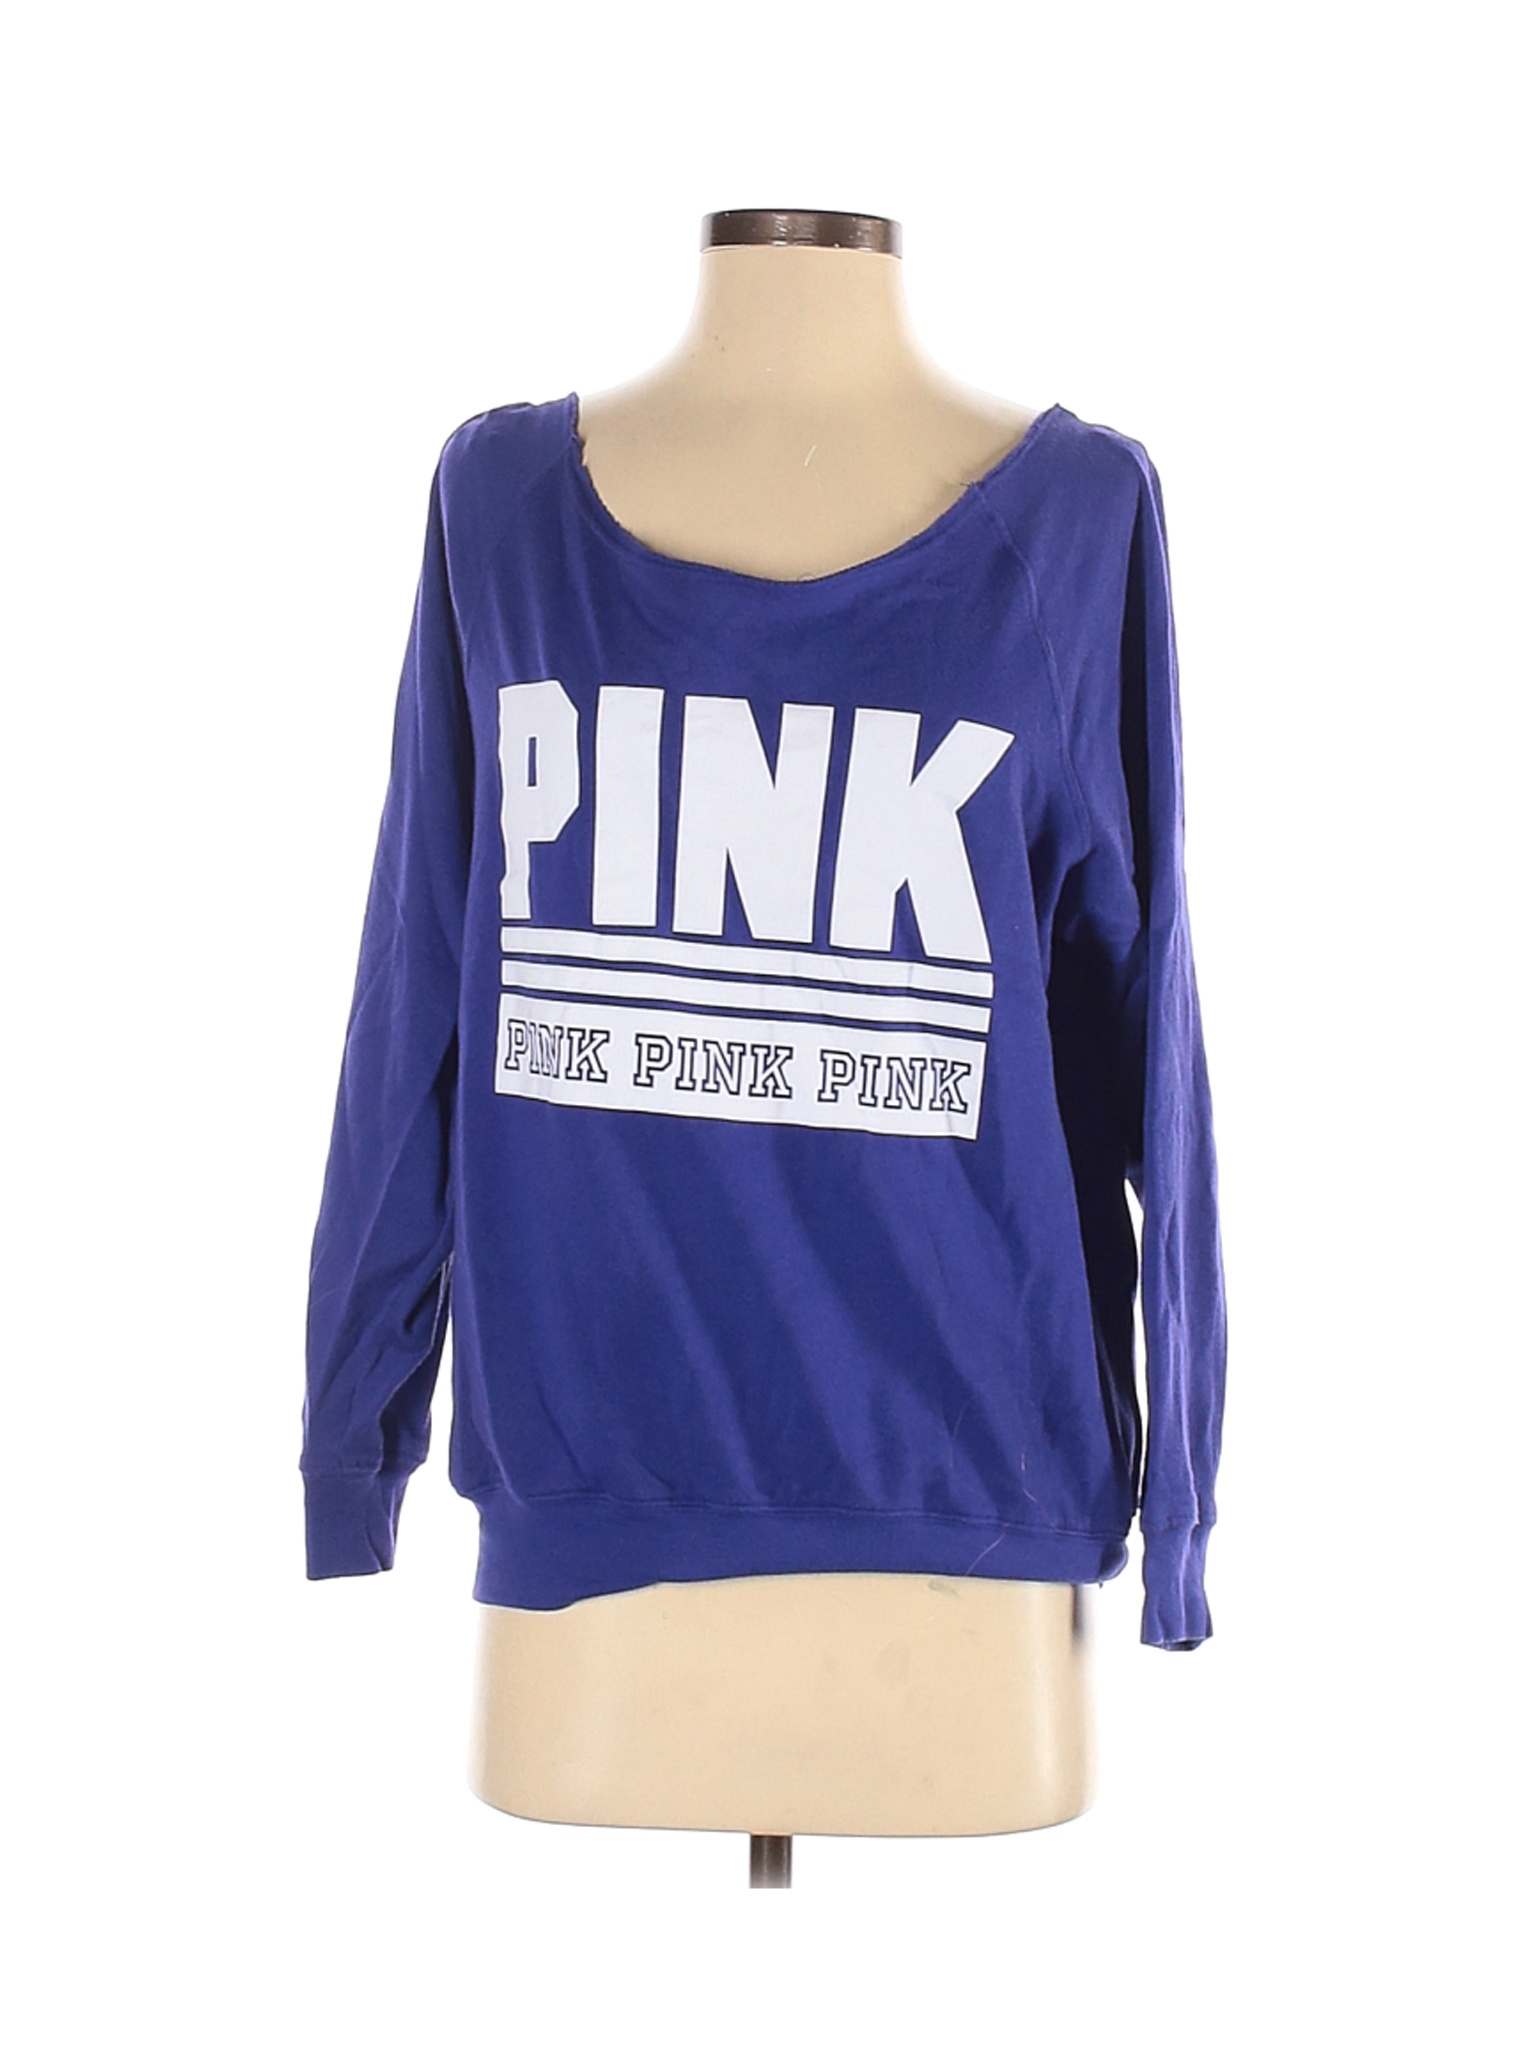 Victoria's Secret Pink Women Blue Sweatshirt S | eBay